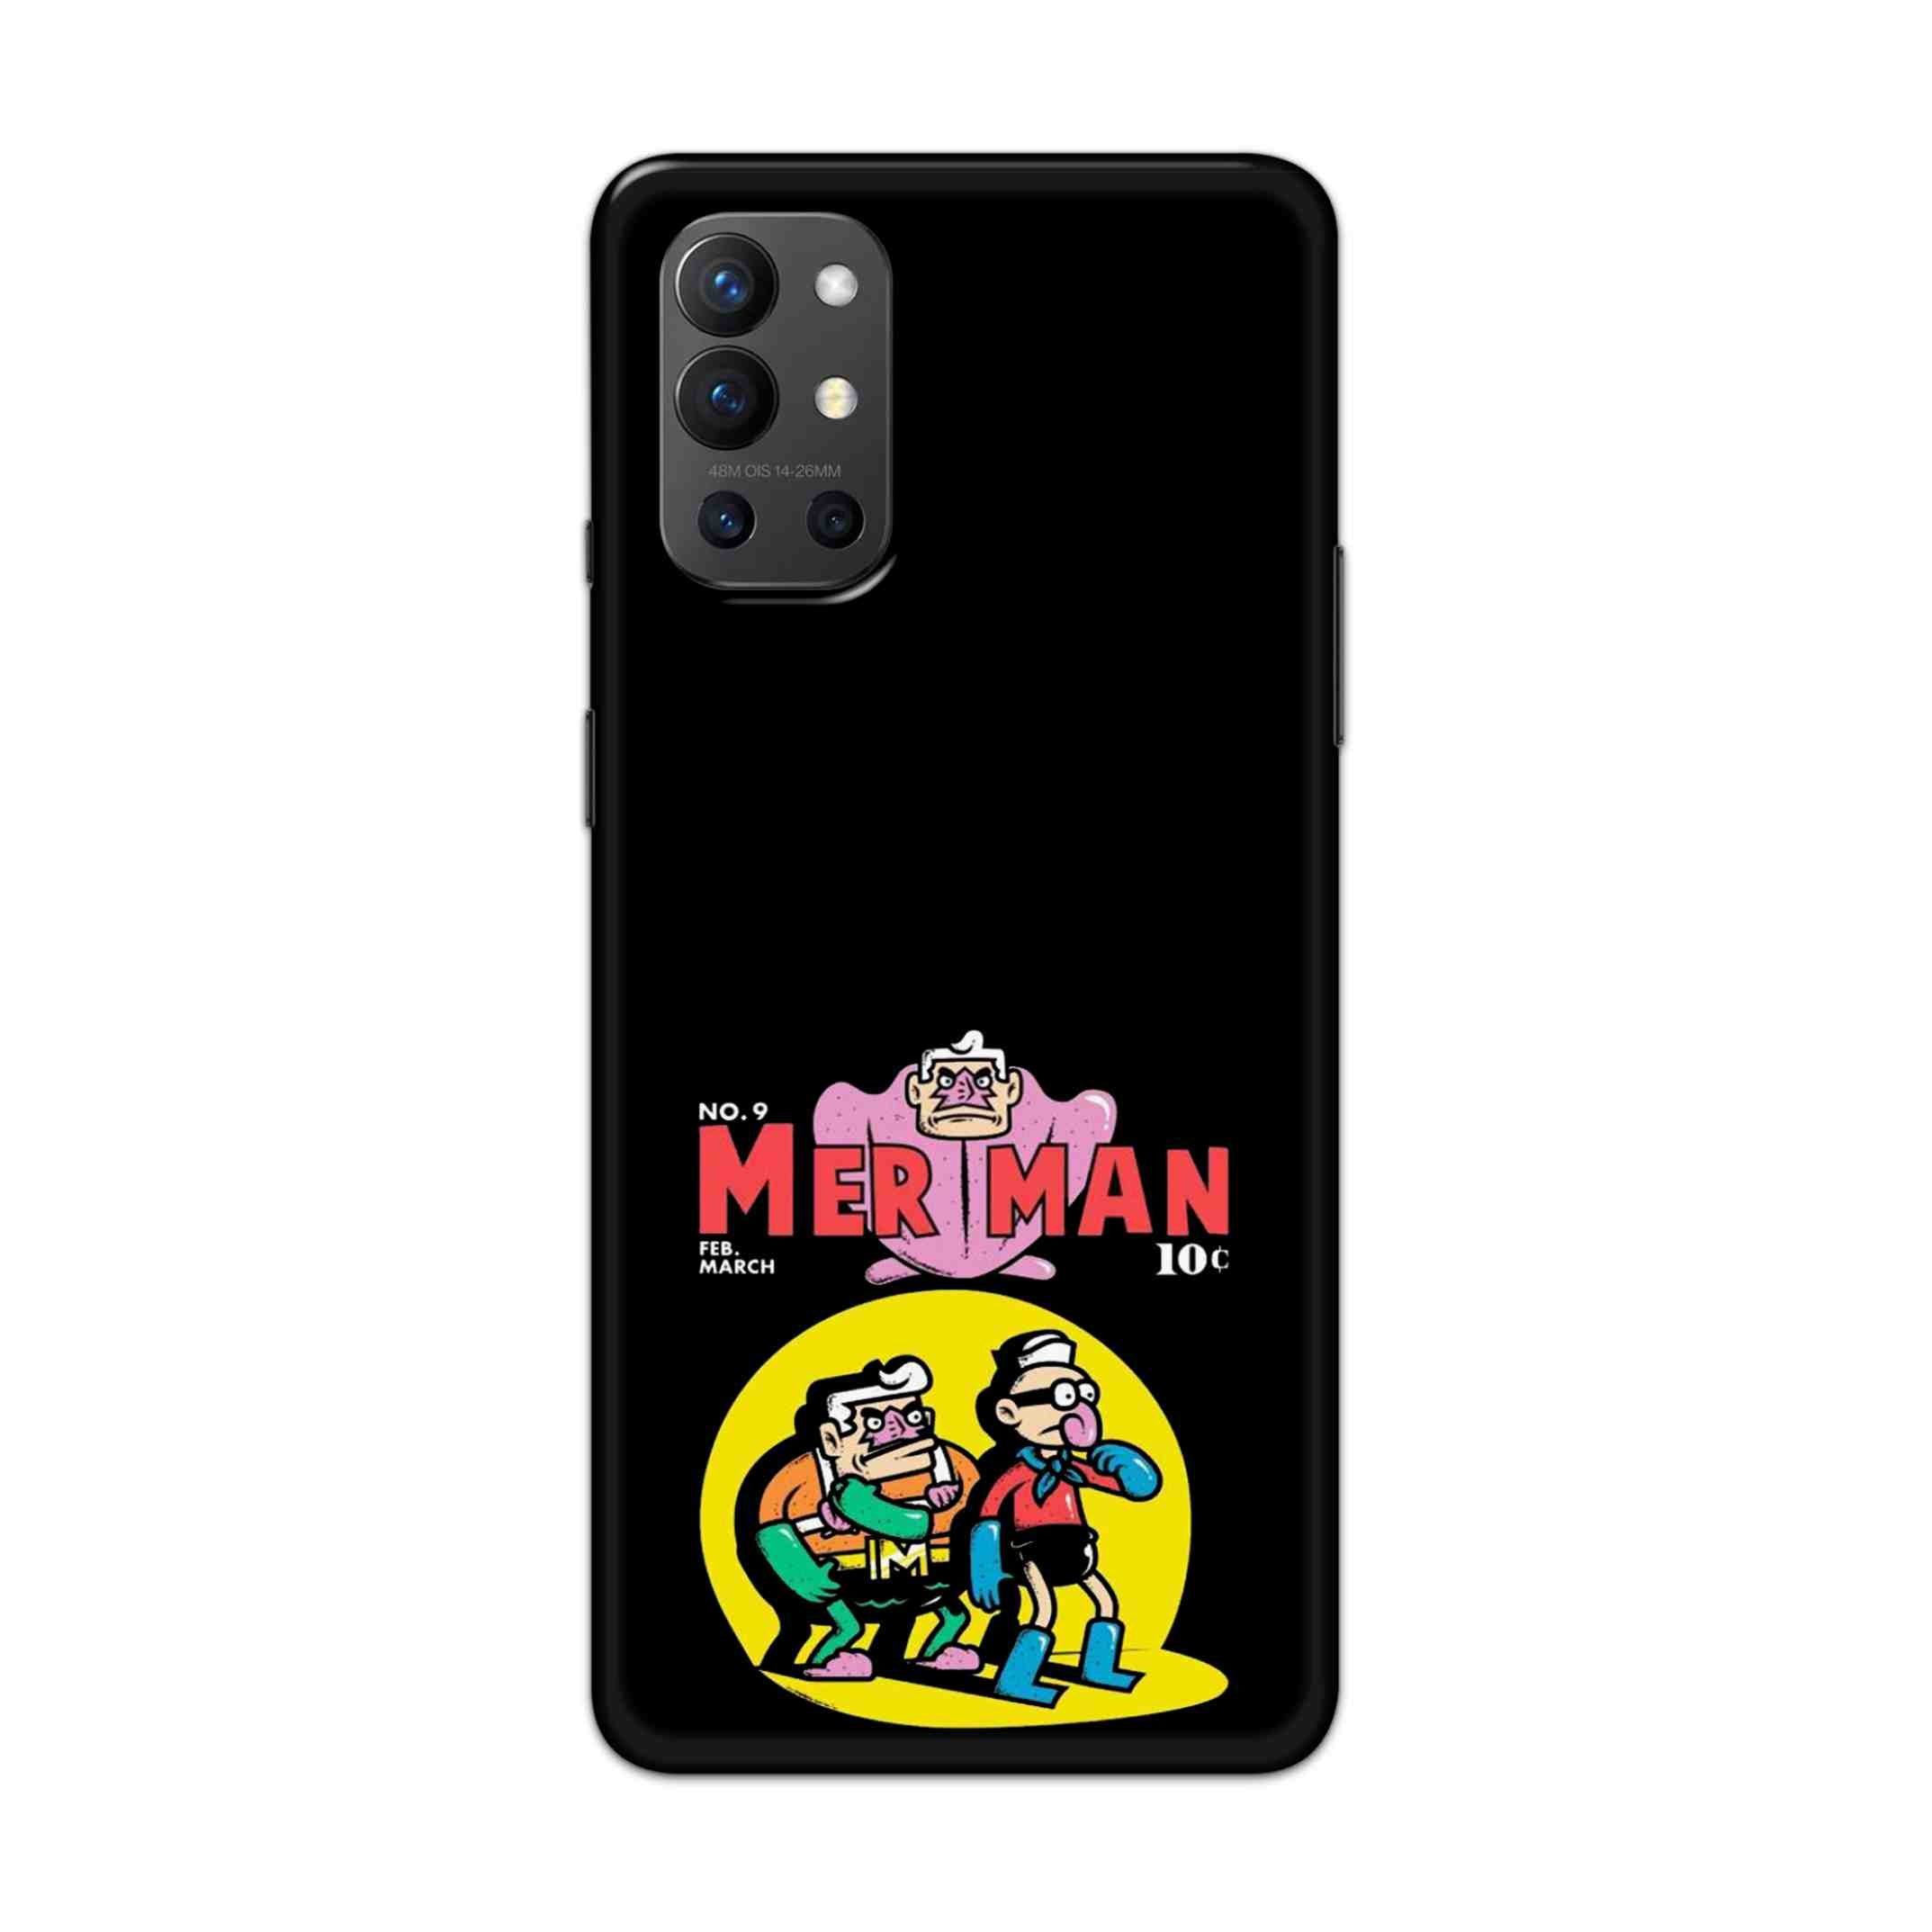 Buy Merman Hard Back Mobile Phone Case Cover For OnePlus 9R / 8T Online